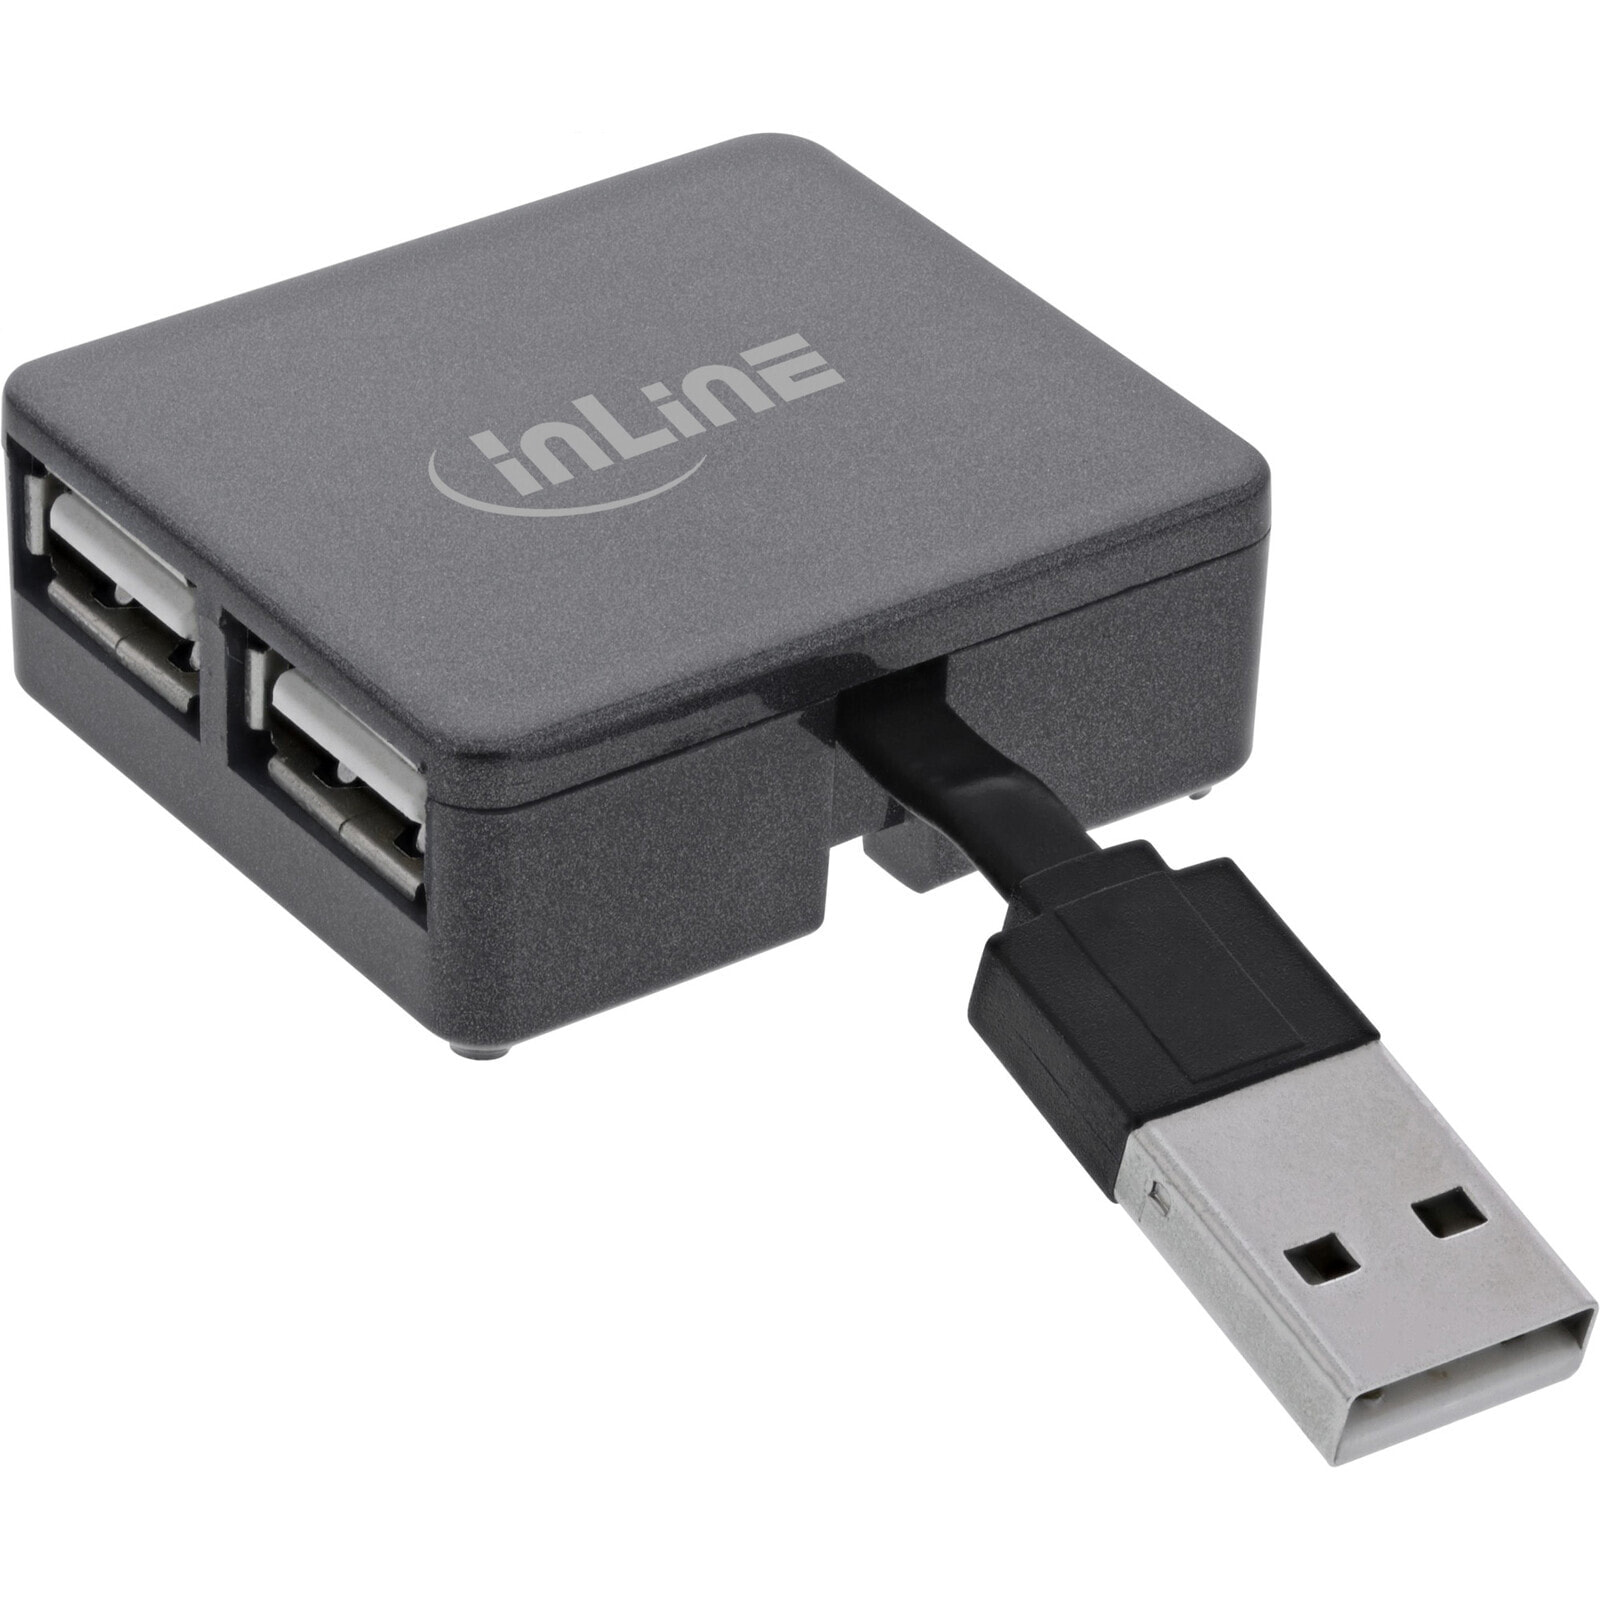 USB 2.0 4-Port Hub - USB-A male to 4x USB-A female - cable 4cm